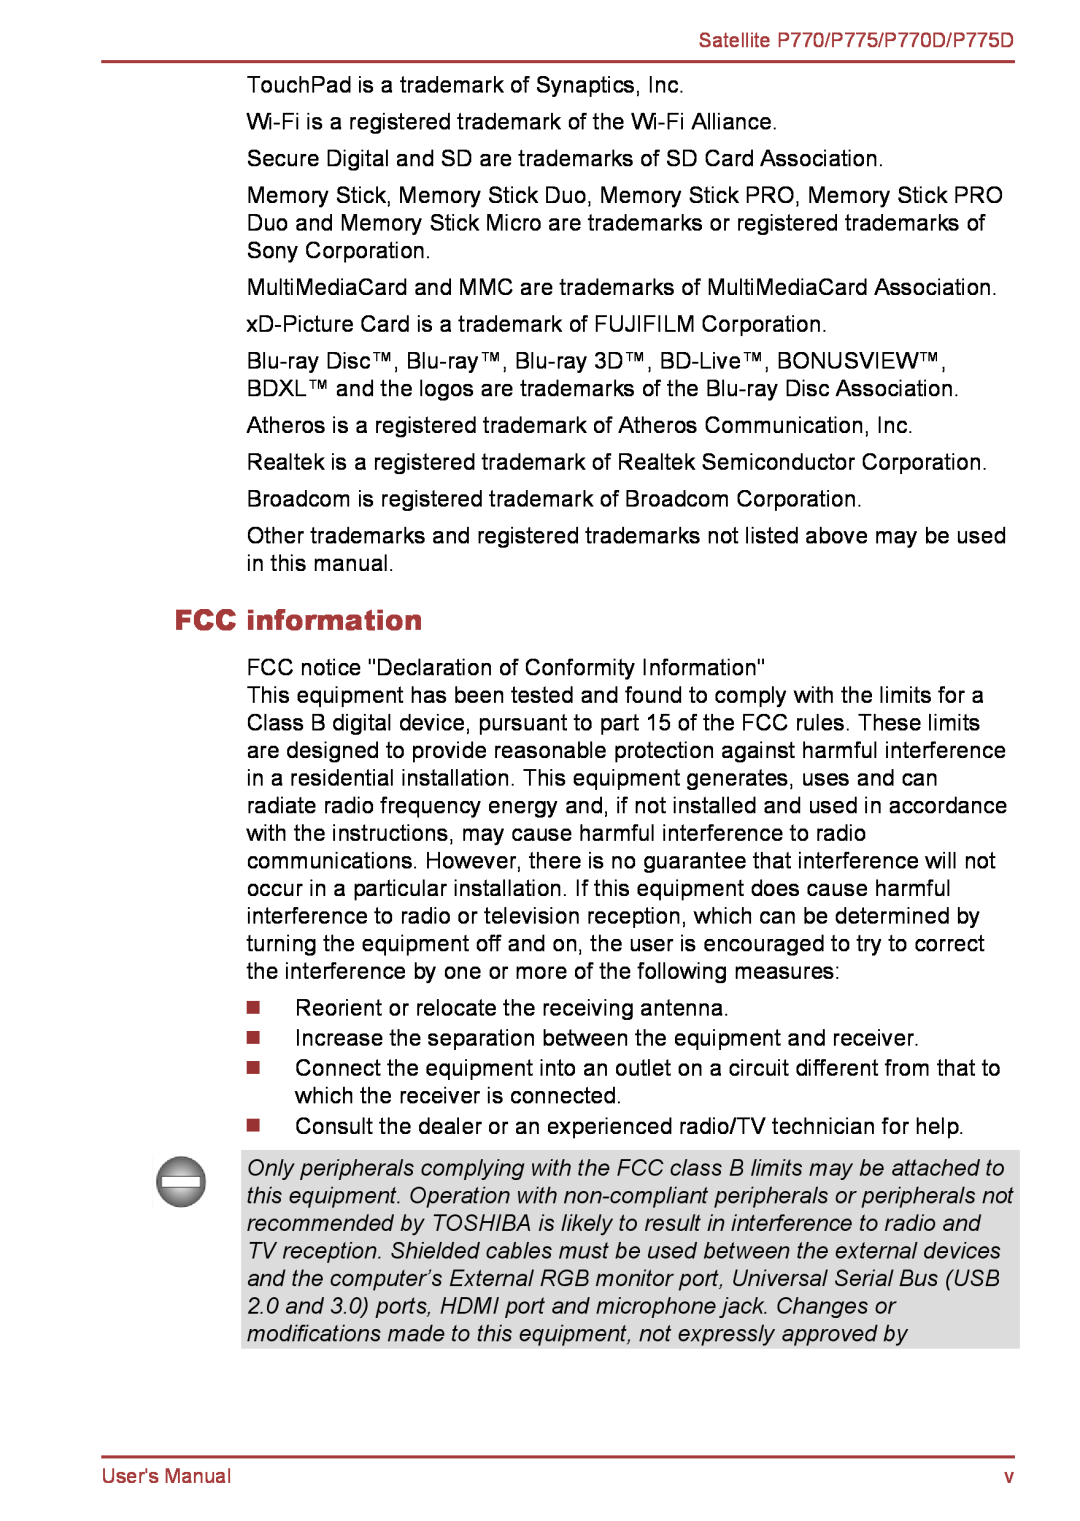 Toshiba P770 user manual FCC information 